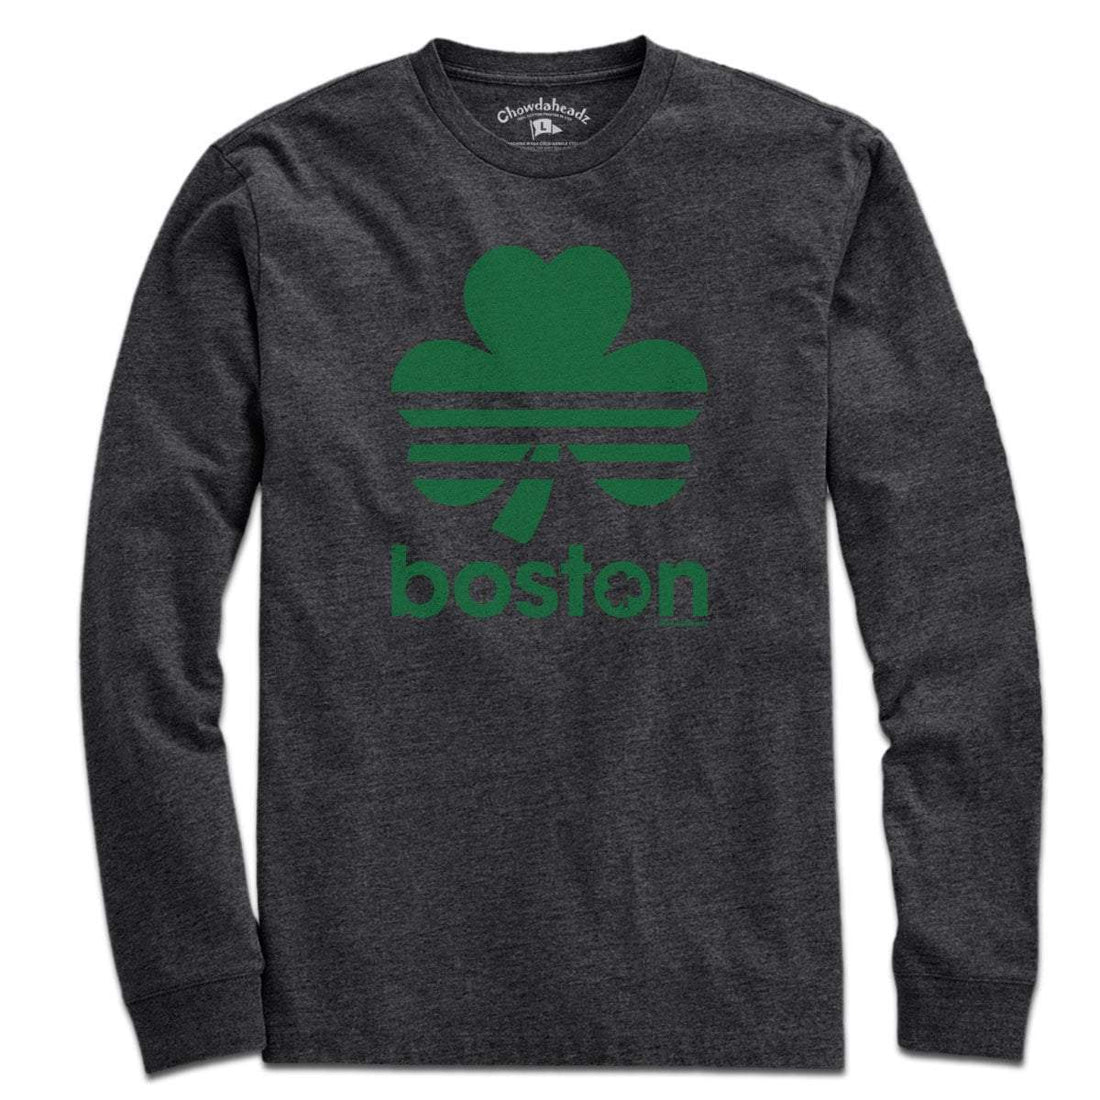 Boston Retro Shamrock Green Line T-Shirt - Chowdaheadz